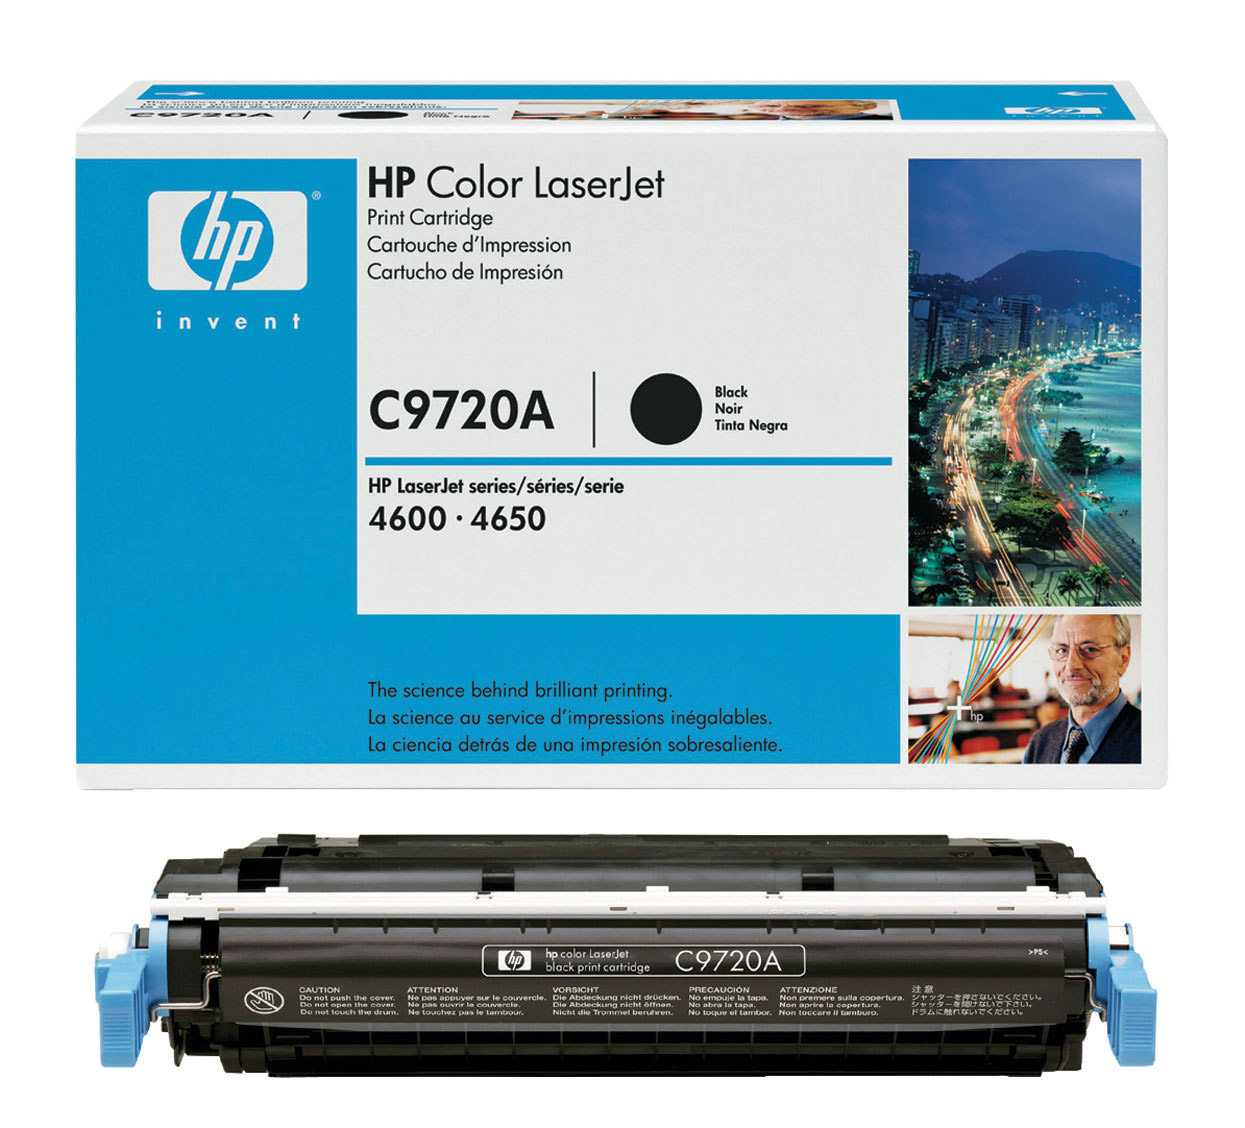 HP C9720A Black printer cartridge